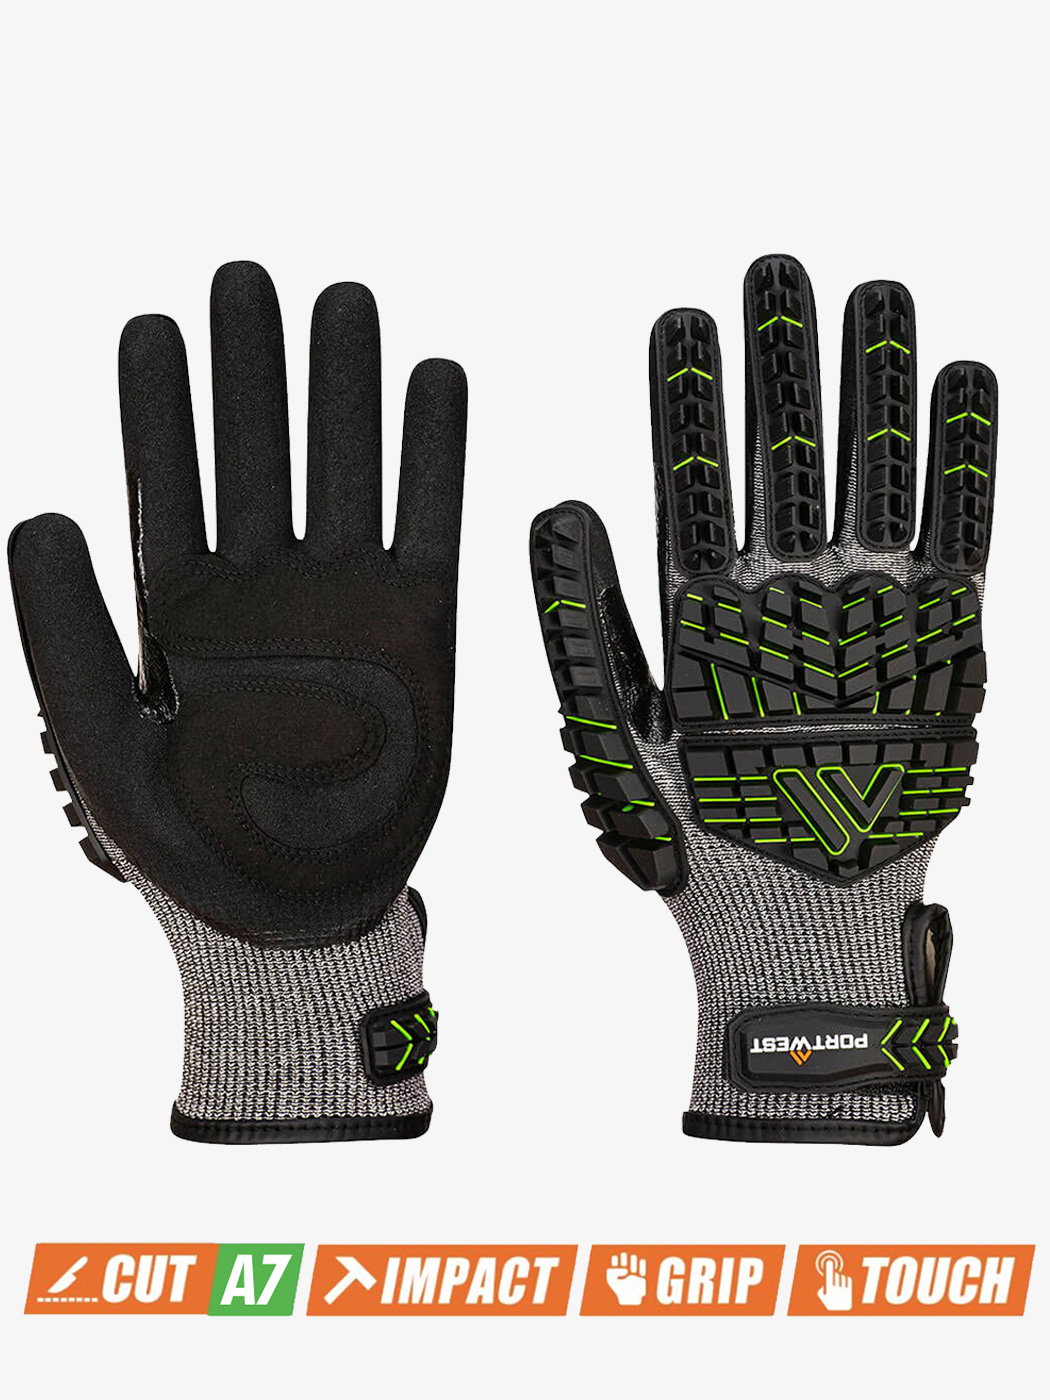 VHR15 Nitrile Foam Impact Glove – Style A755